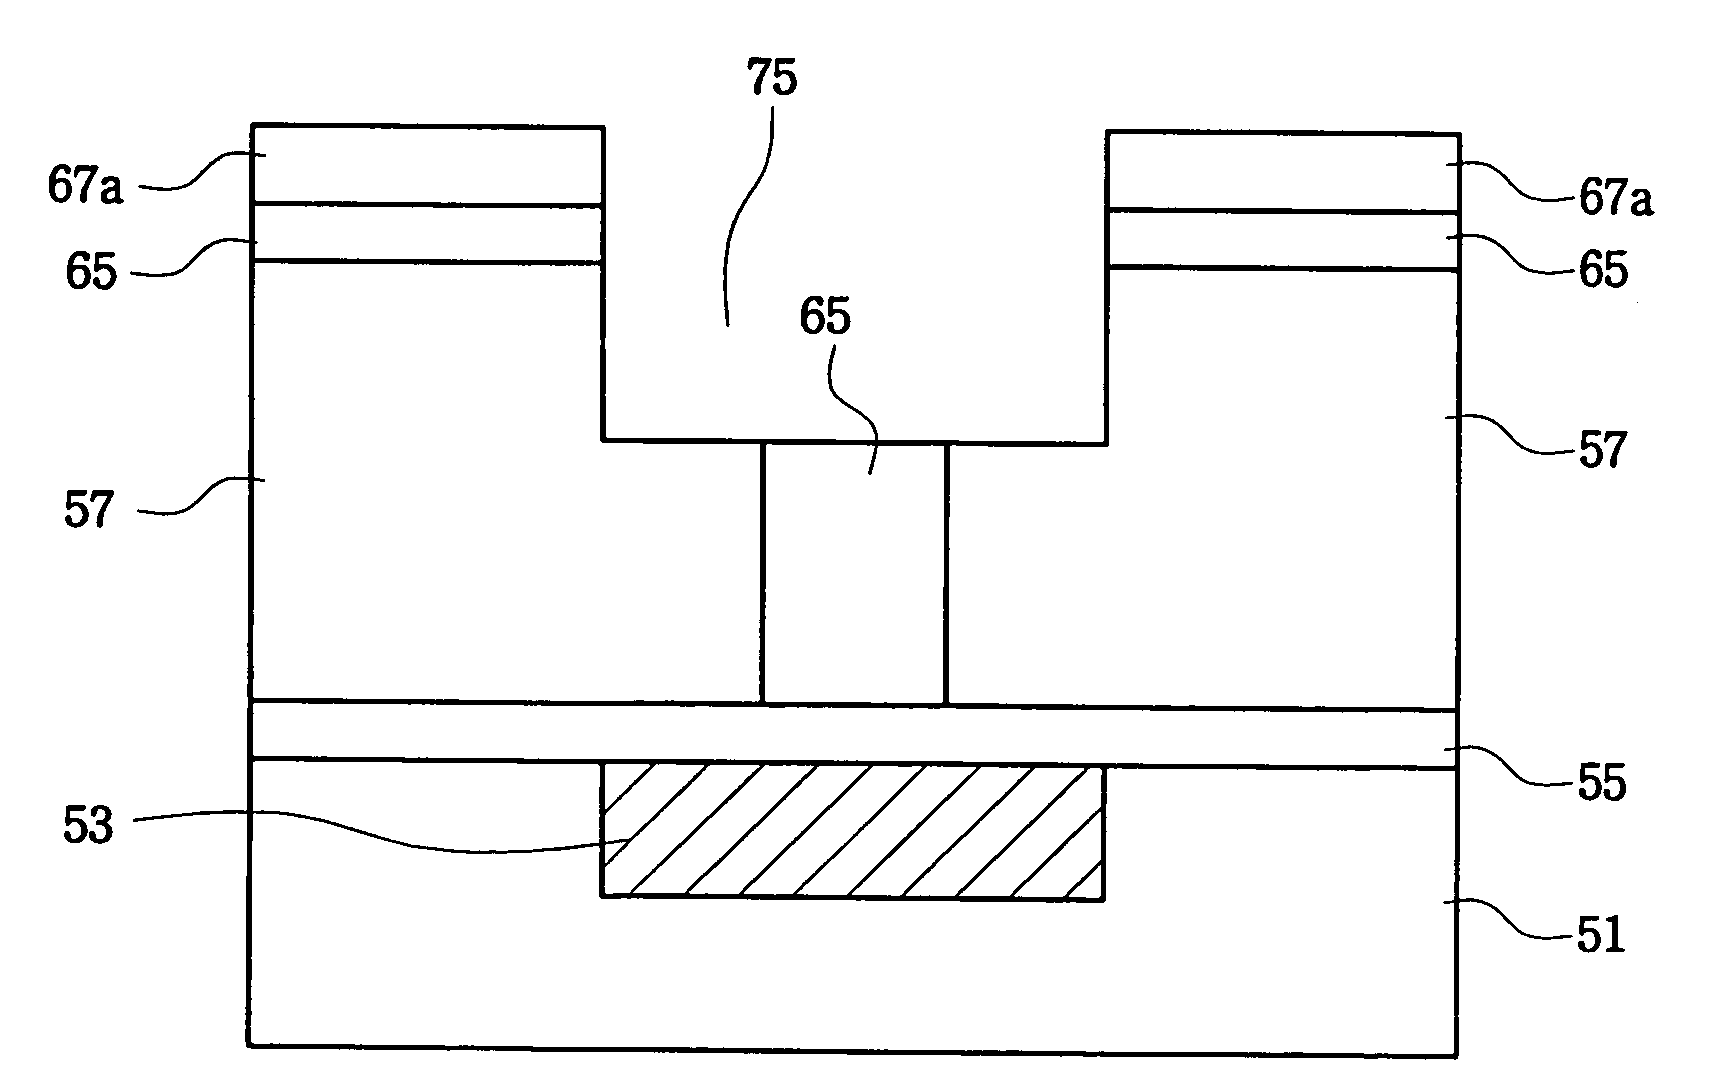 Method of forming dual damascene metal interconnection employing sacrificial metal oxide layer